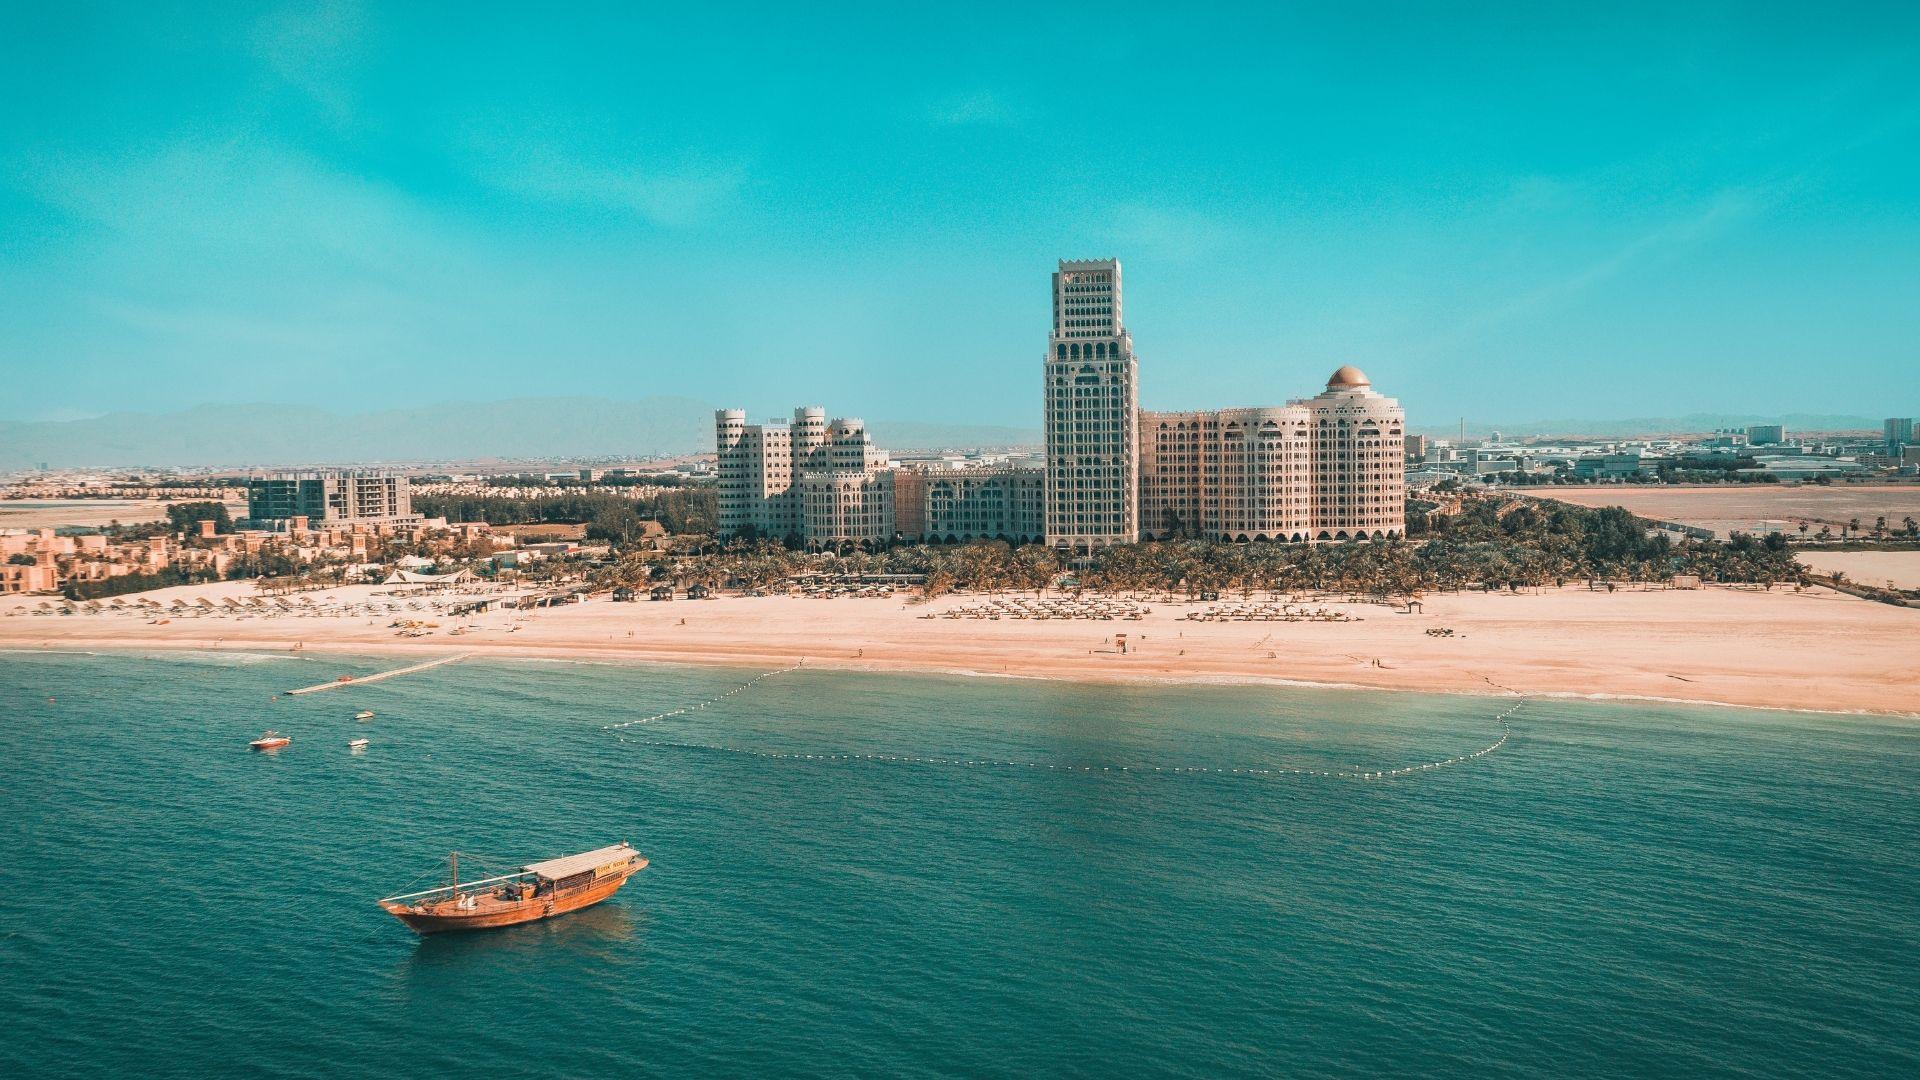 RIKAS Hospitality Group will open a beach club in Ras Al Khaimah